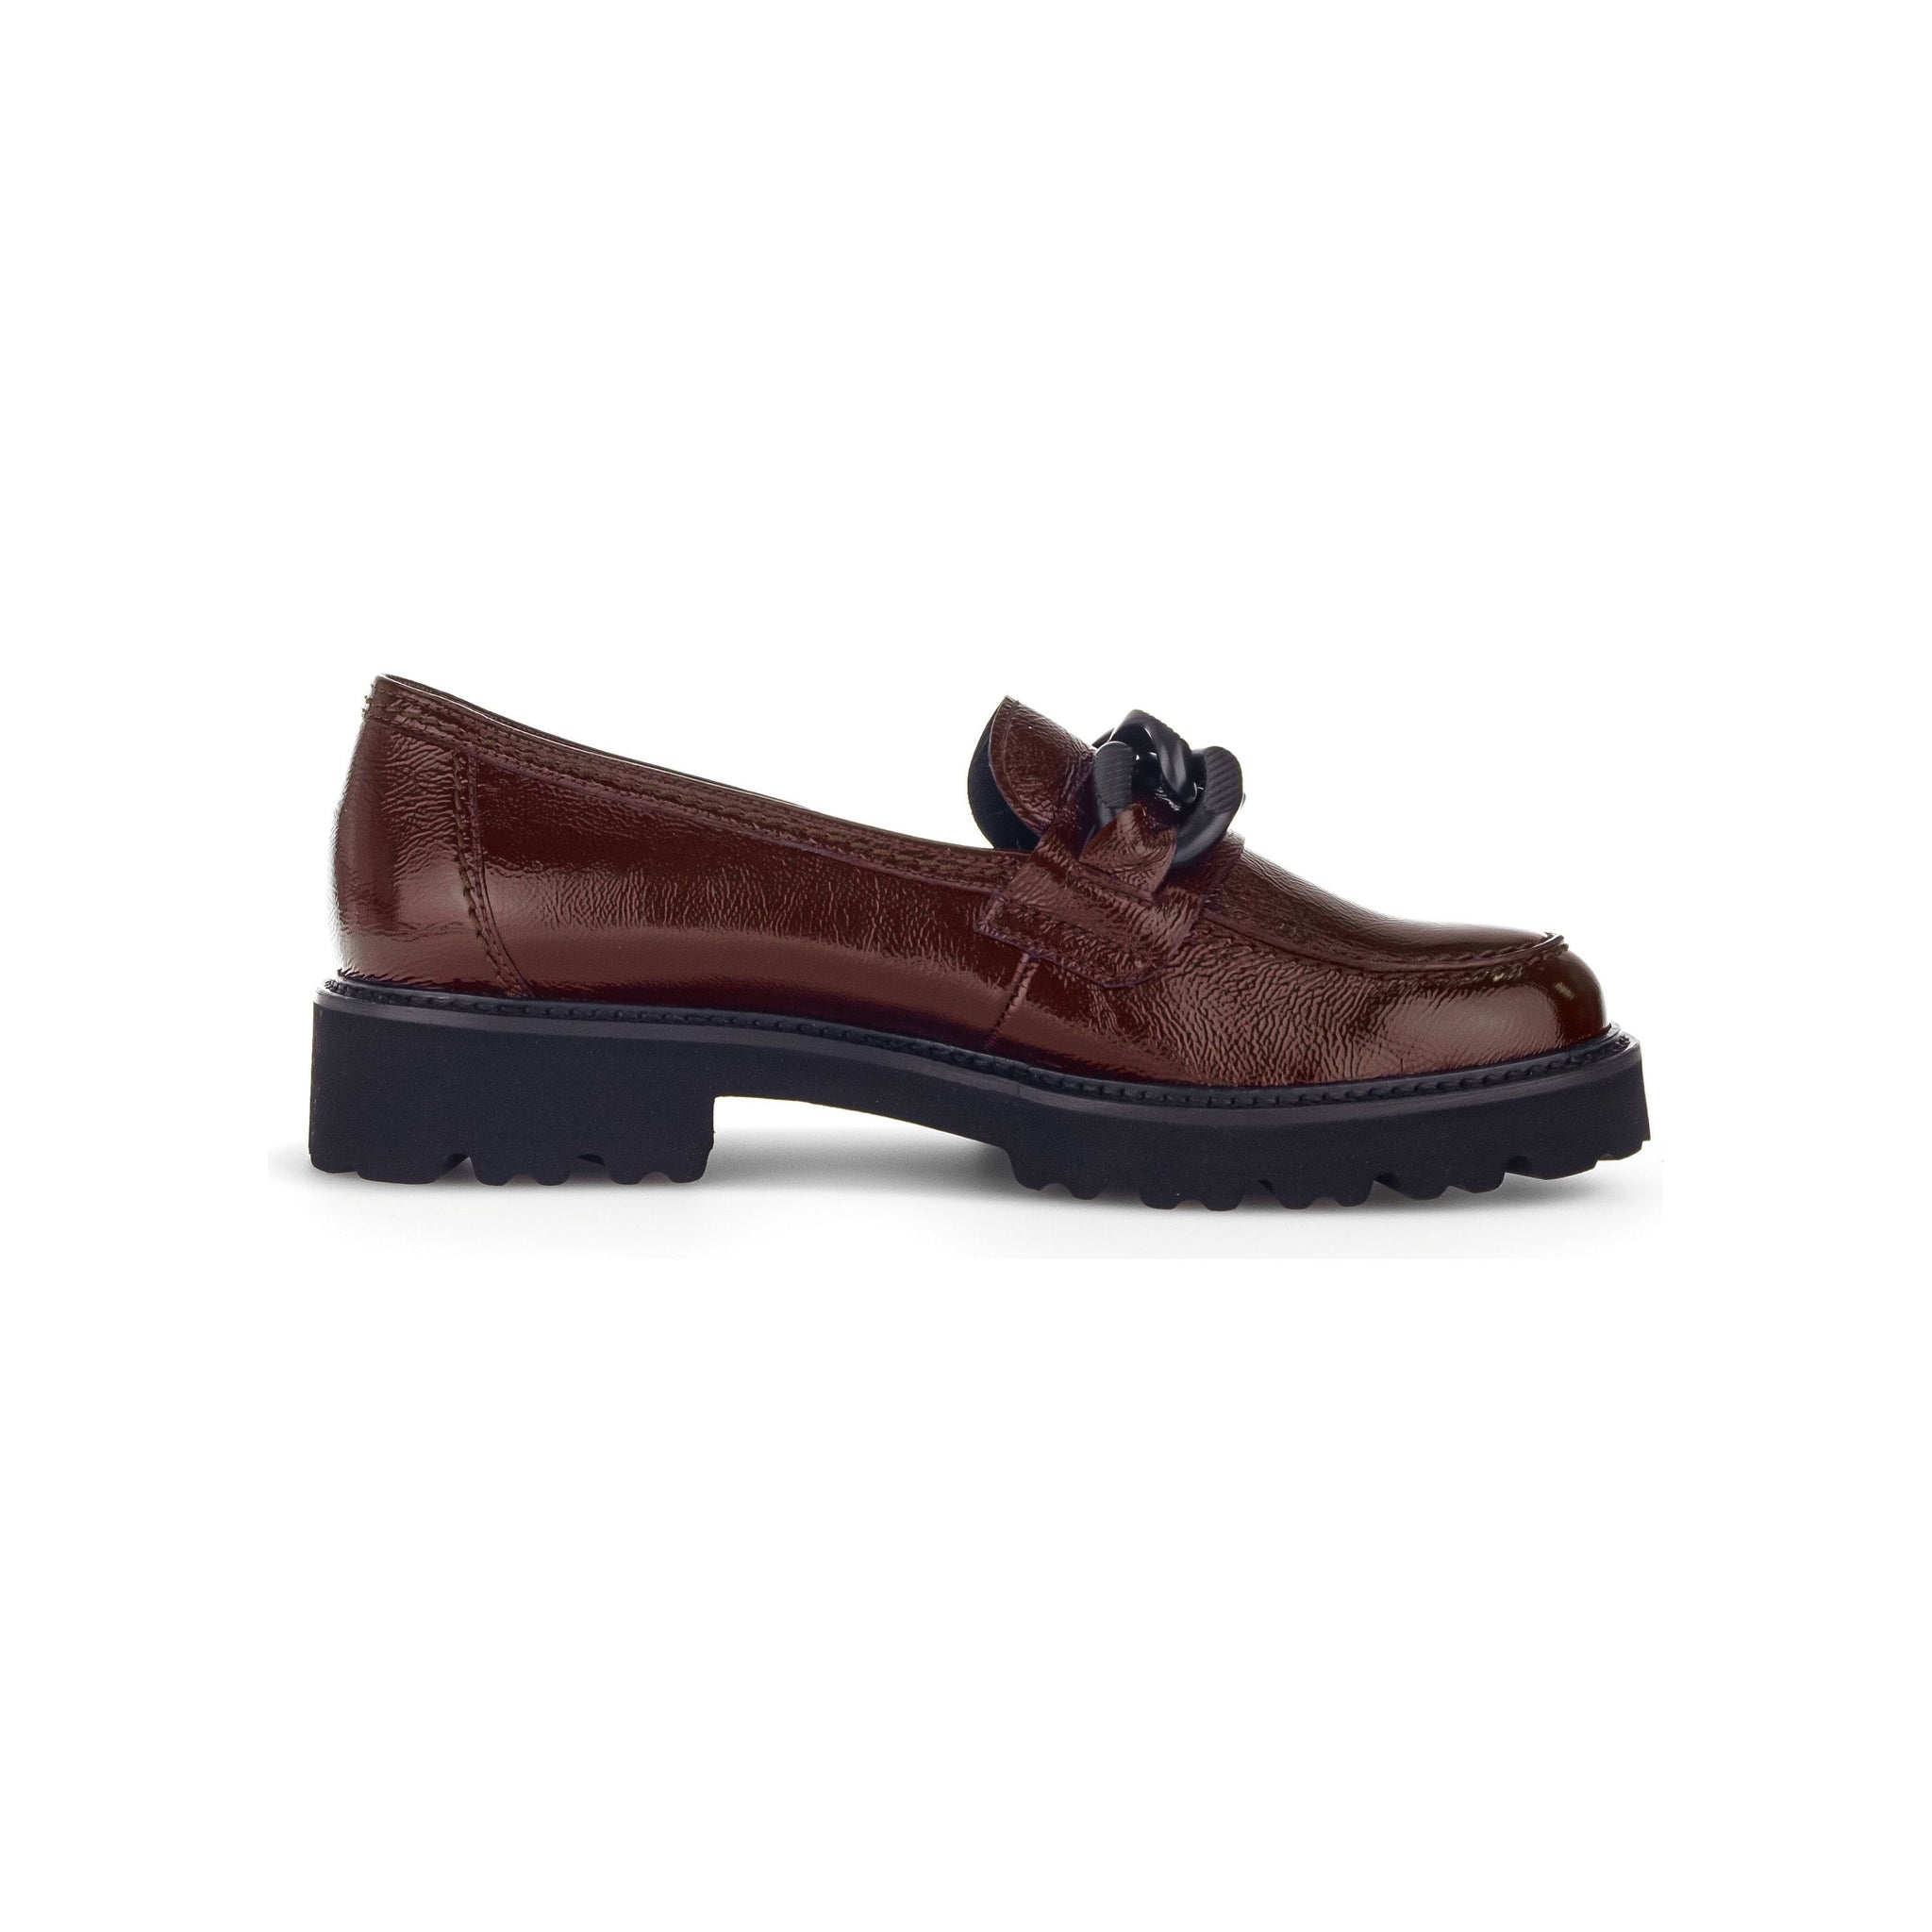 Gabor Squeeze (35.240.95) - Ladies Loafer in Bordeaux Patent .Gabor | Wisemans | Bantry | Shoe Shop | West Cork | Ireland